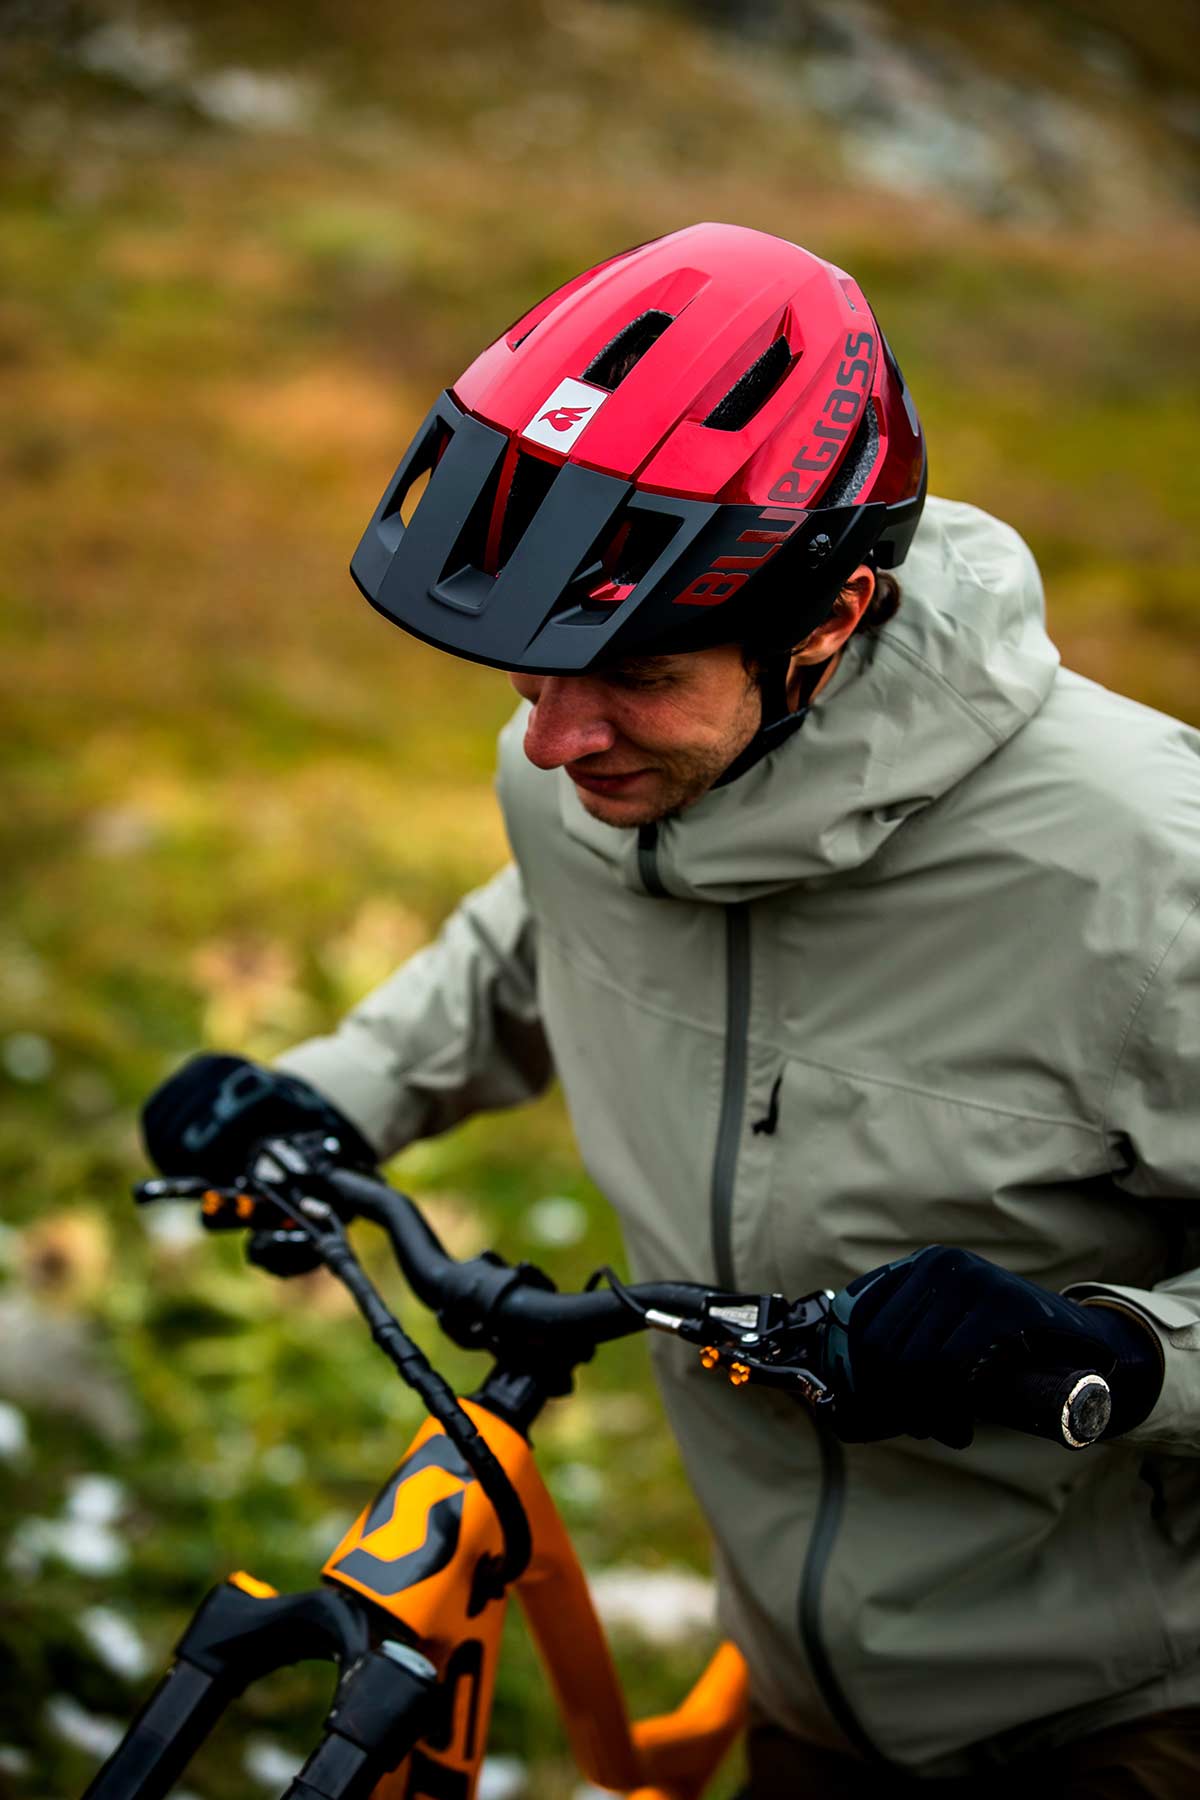 modeling bluegrass rogue core mips mtb helmet for enduro pushing bike up hill